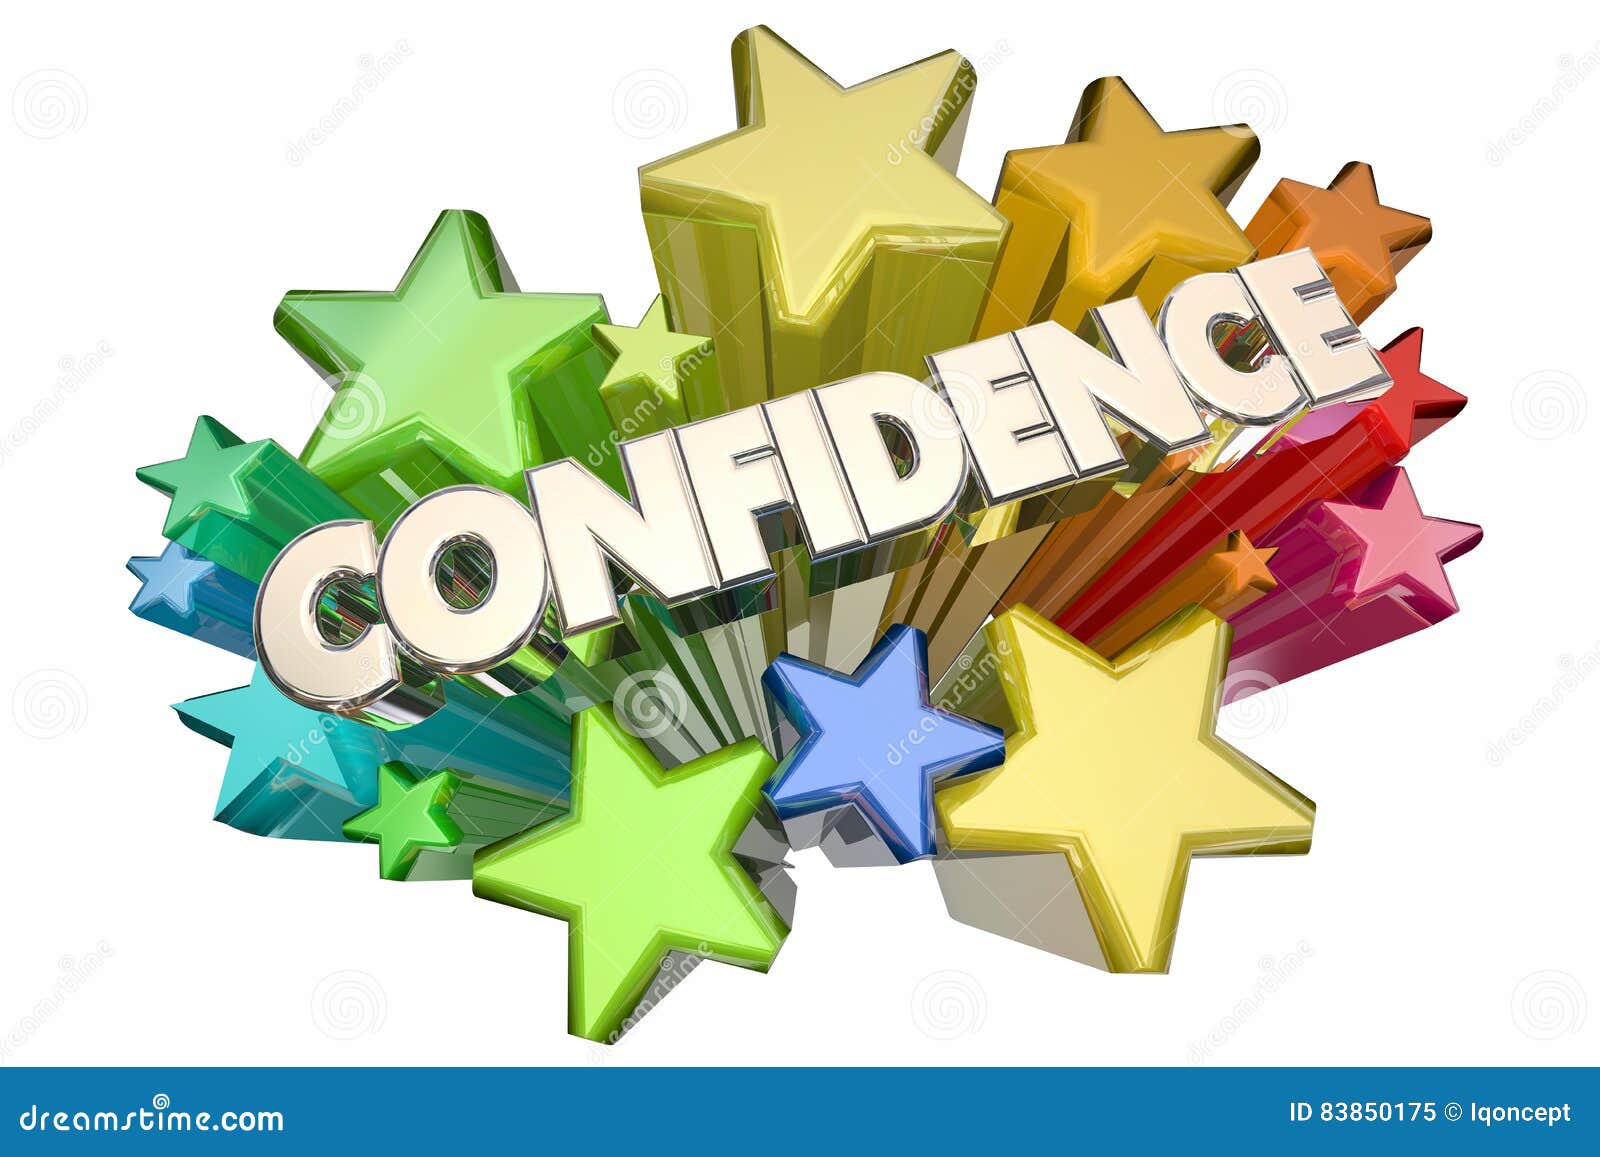 confidence self assured certain word stars